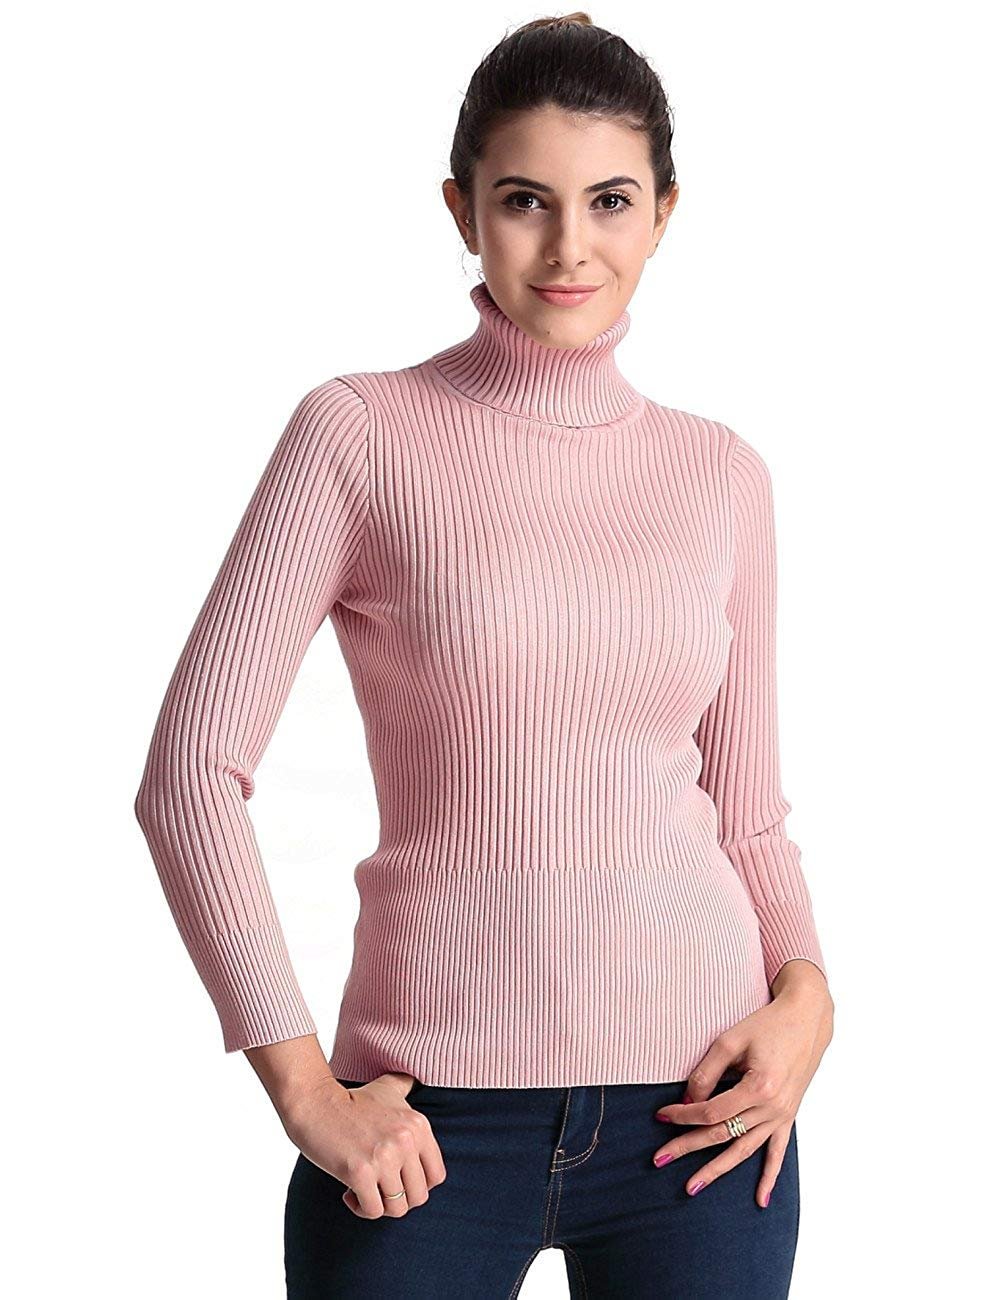 Women's Ribbed Turtleneck Long Sleeve Sweater Tops